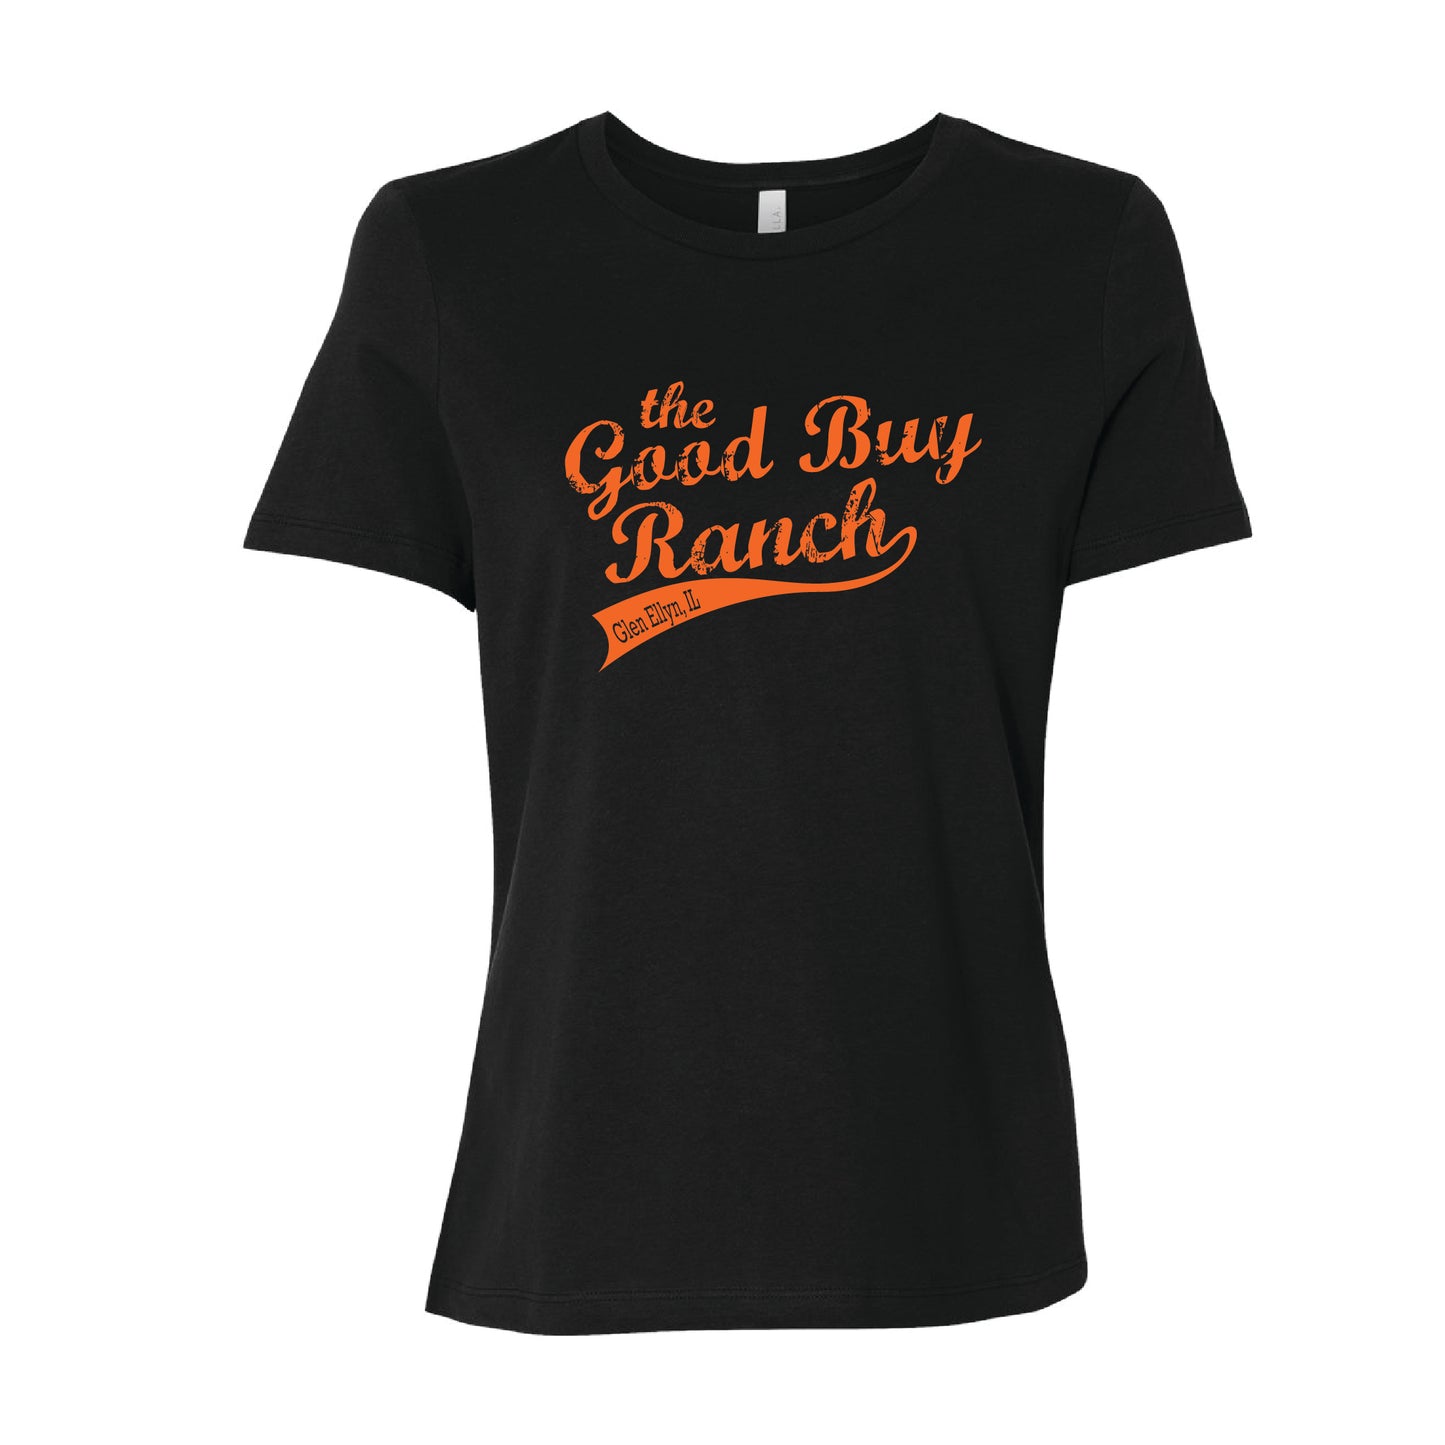 Good Buy Ranch Ladies T-Shirt